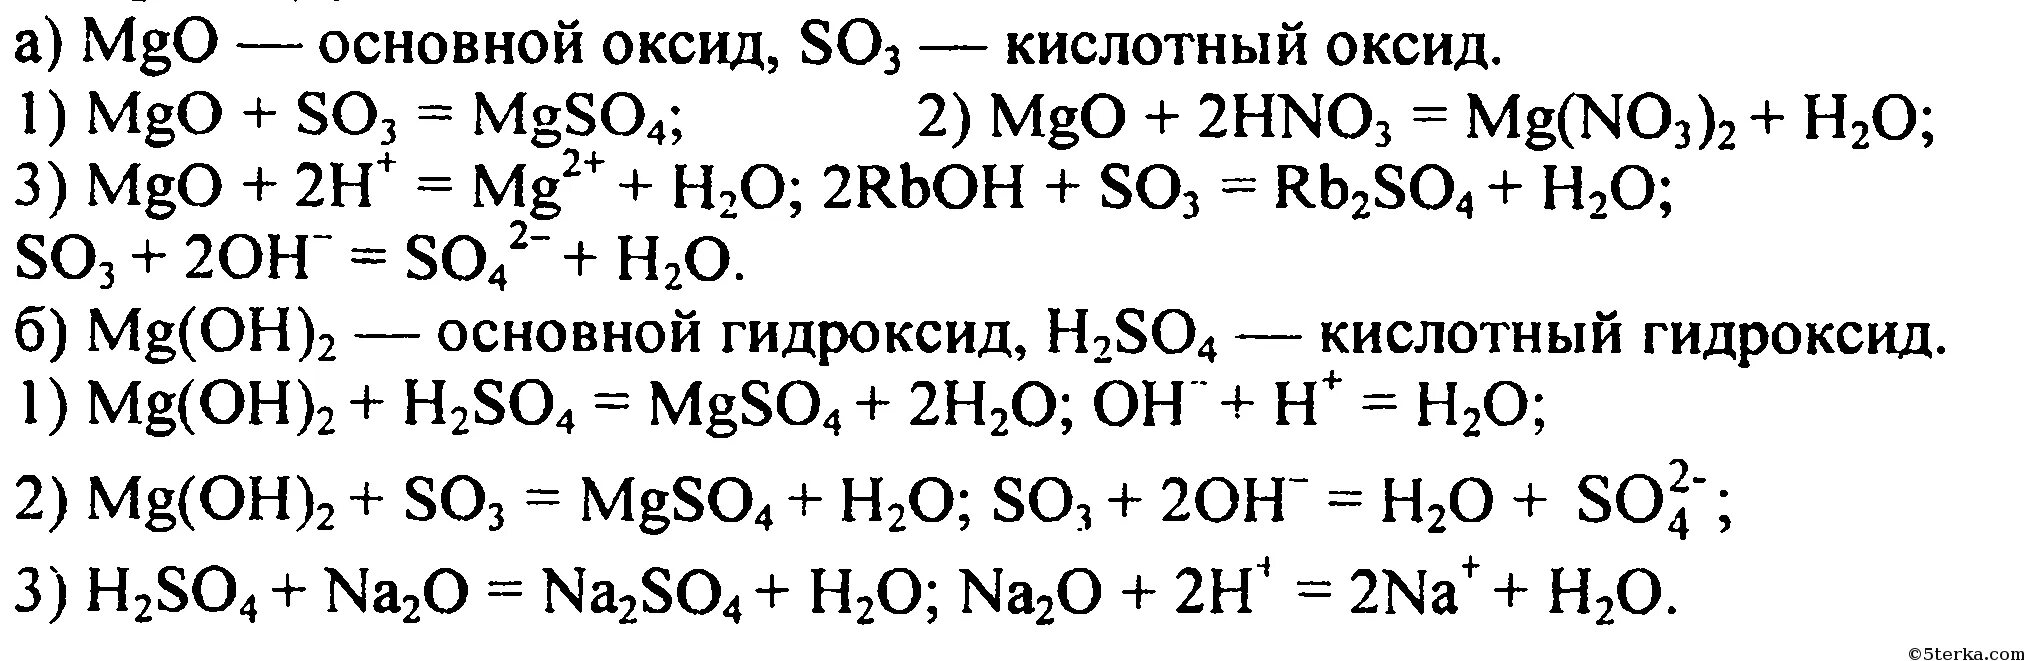 Mgo h2o какая реакция. Уравнение химической реакции MGO И so3. Химические уравнения магний хлор 2. Цепочка реакций с магнием. MGO+h2so4 уравнение реакции.